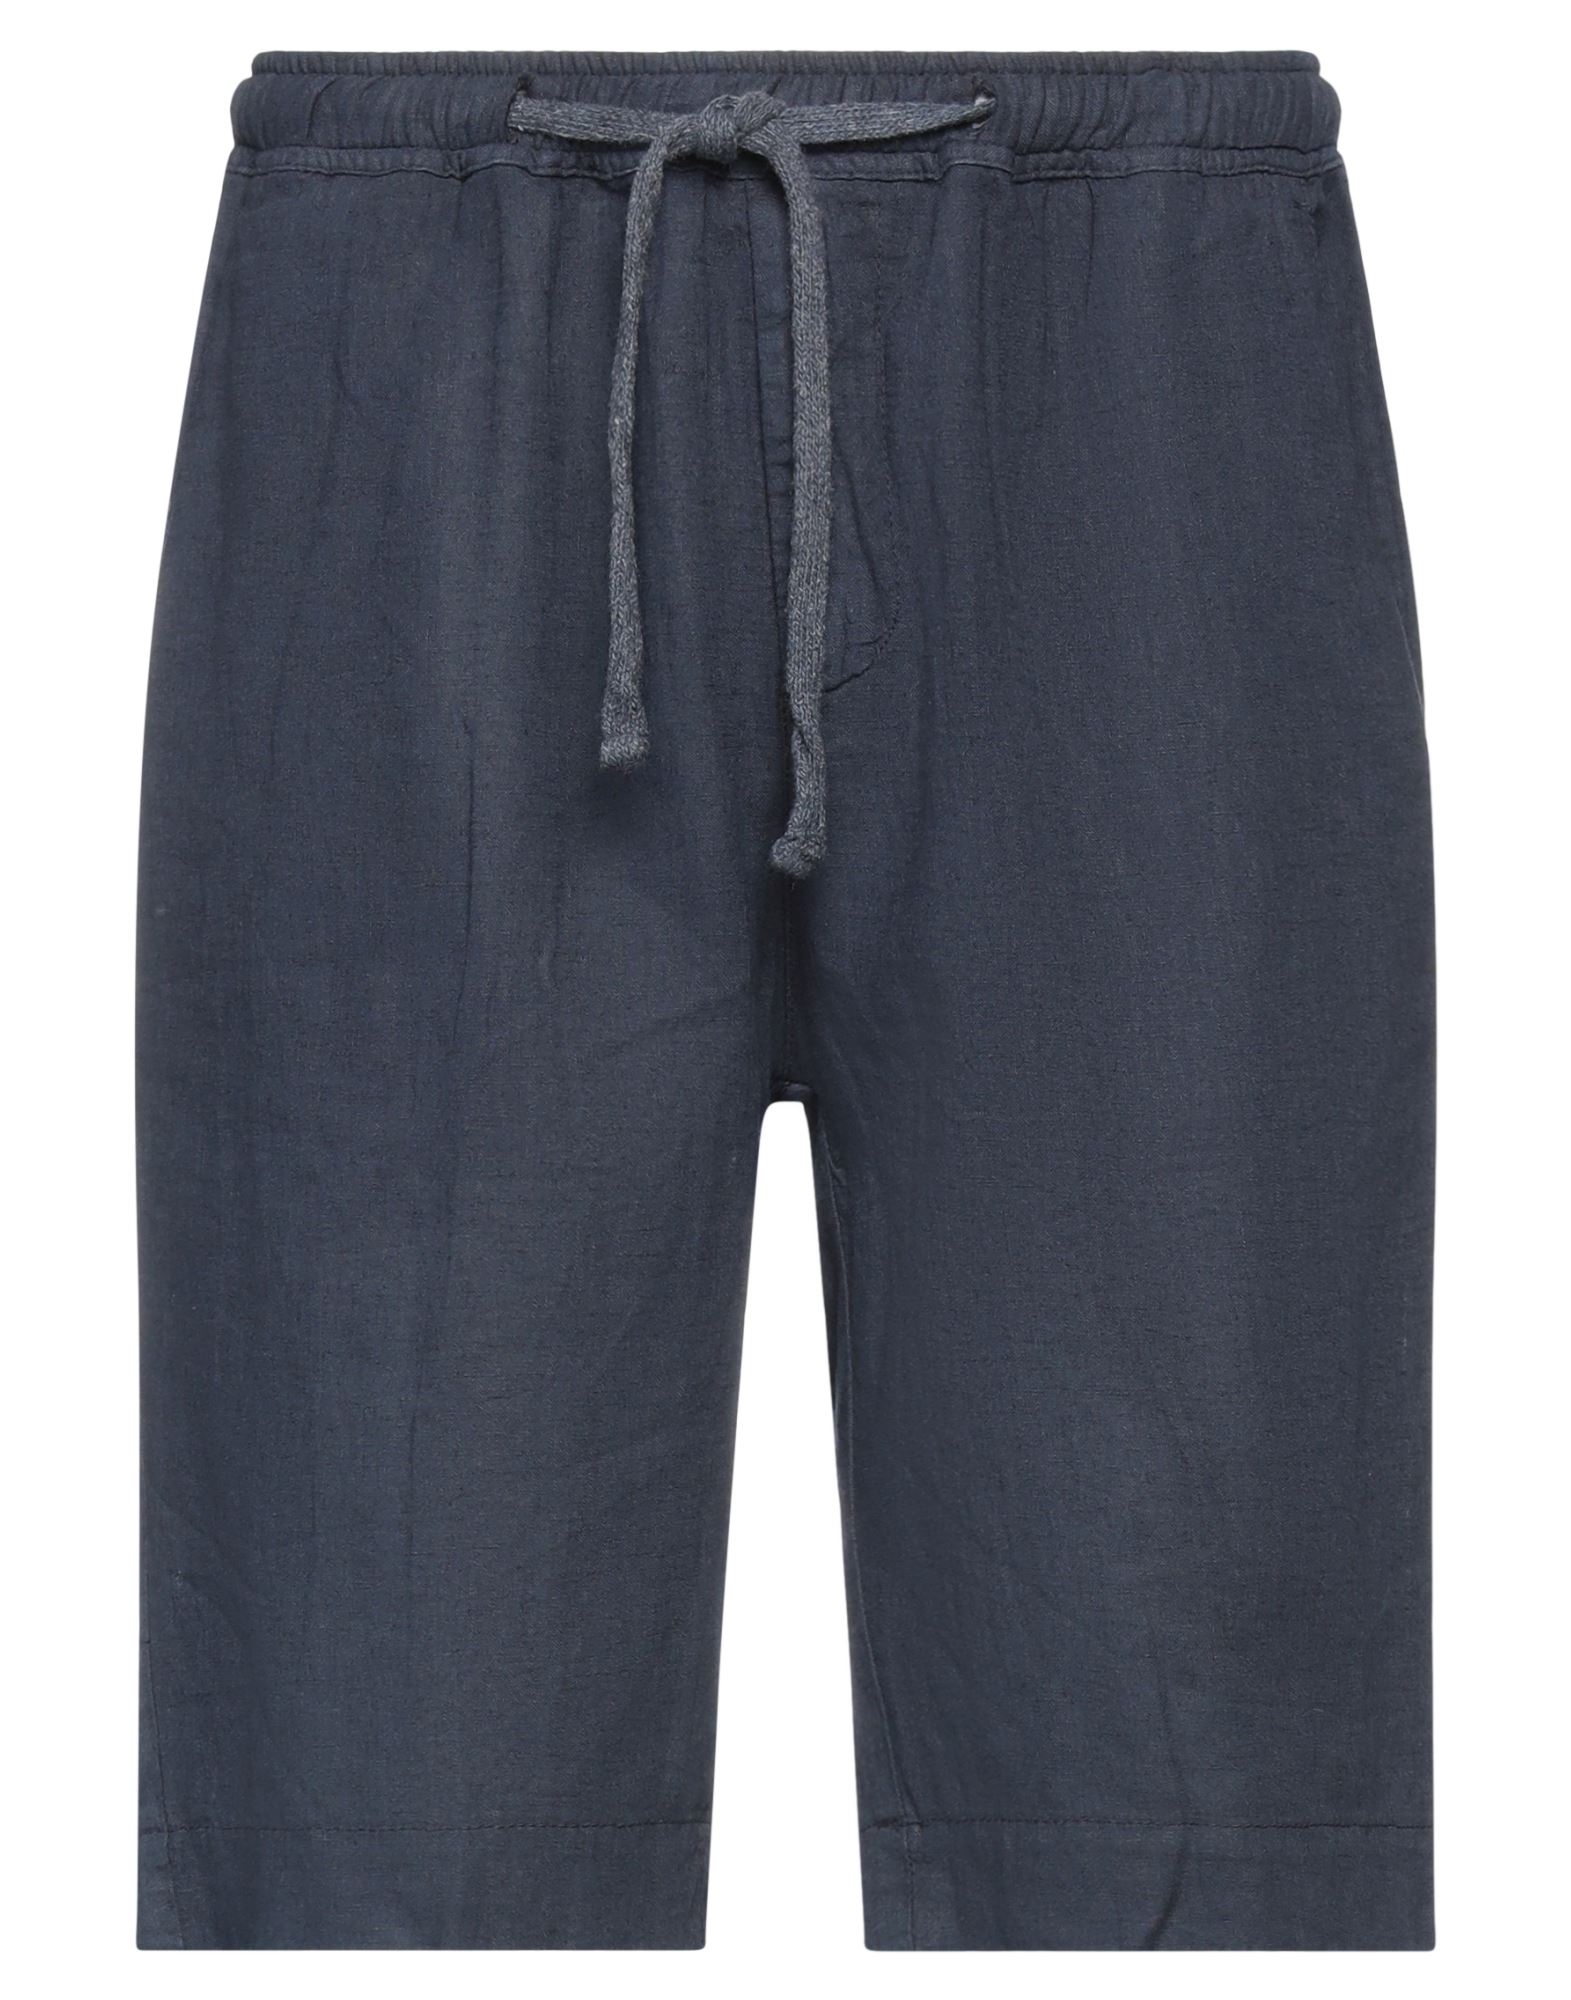 Censured Man Shorts & Bermuda Shorts Midnight Blue Size 28 Linen